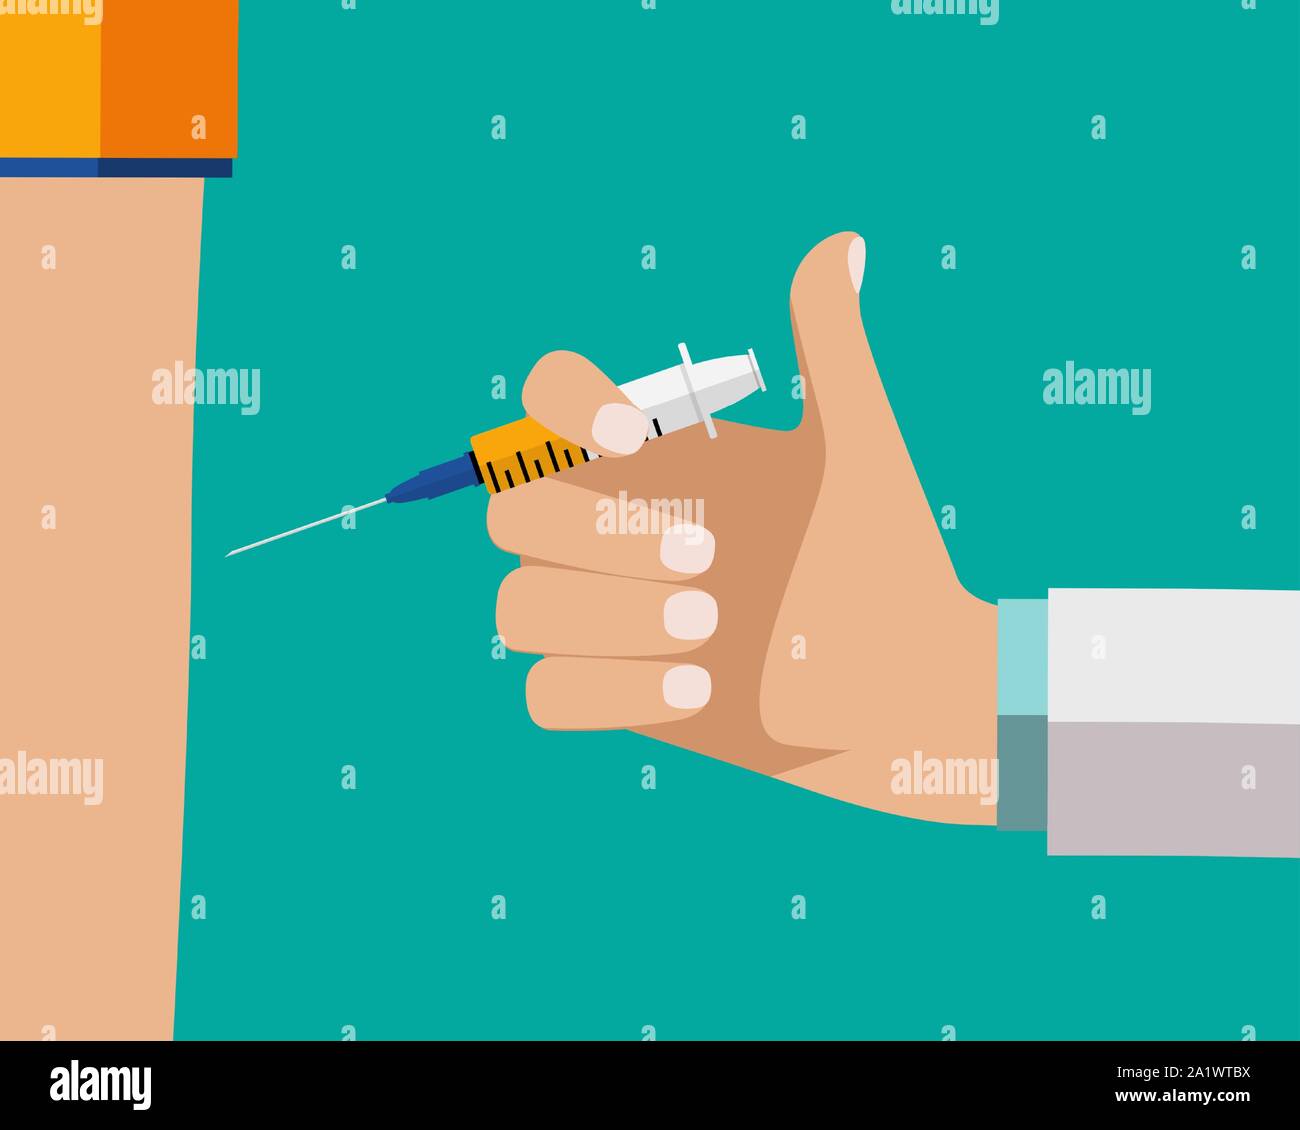 Vaccination concept flat background. Medical awareness flu, polio influenza poster. Vector Illustration Stock Vector